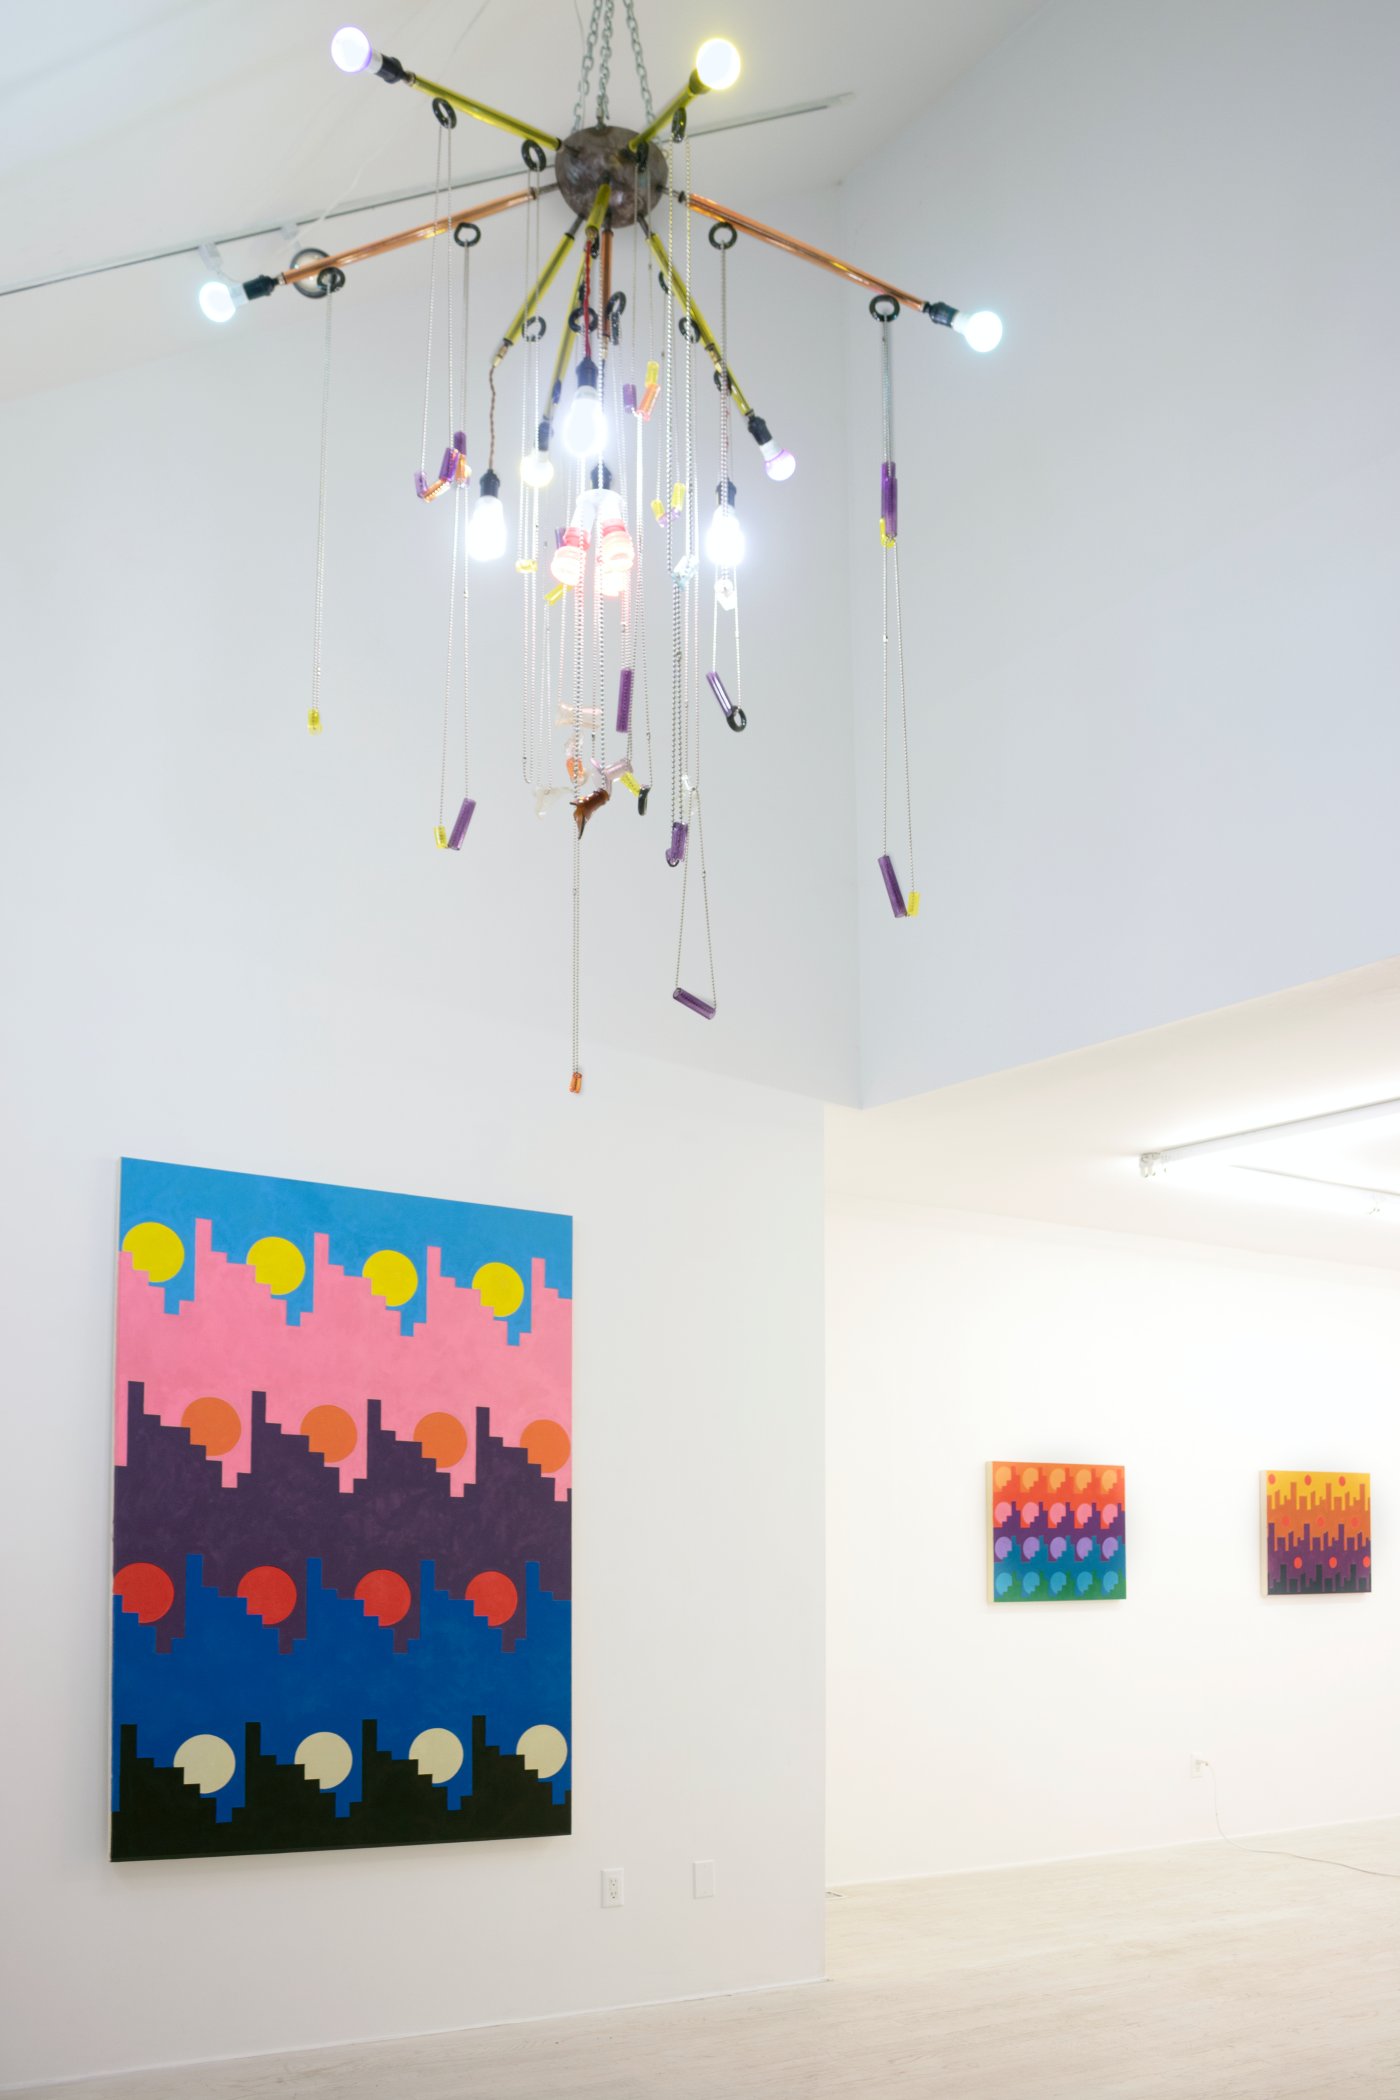 Installation image for NADA Miami 2020, at Halsey McKay Gallery